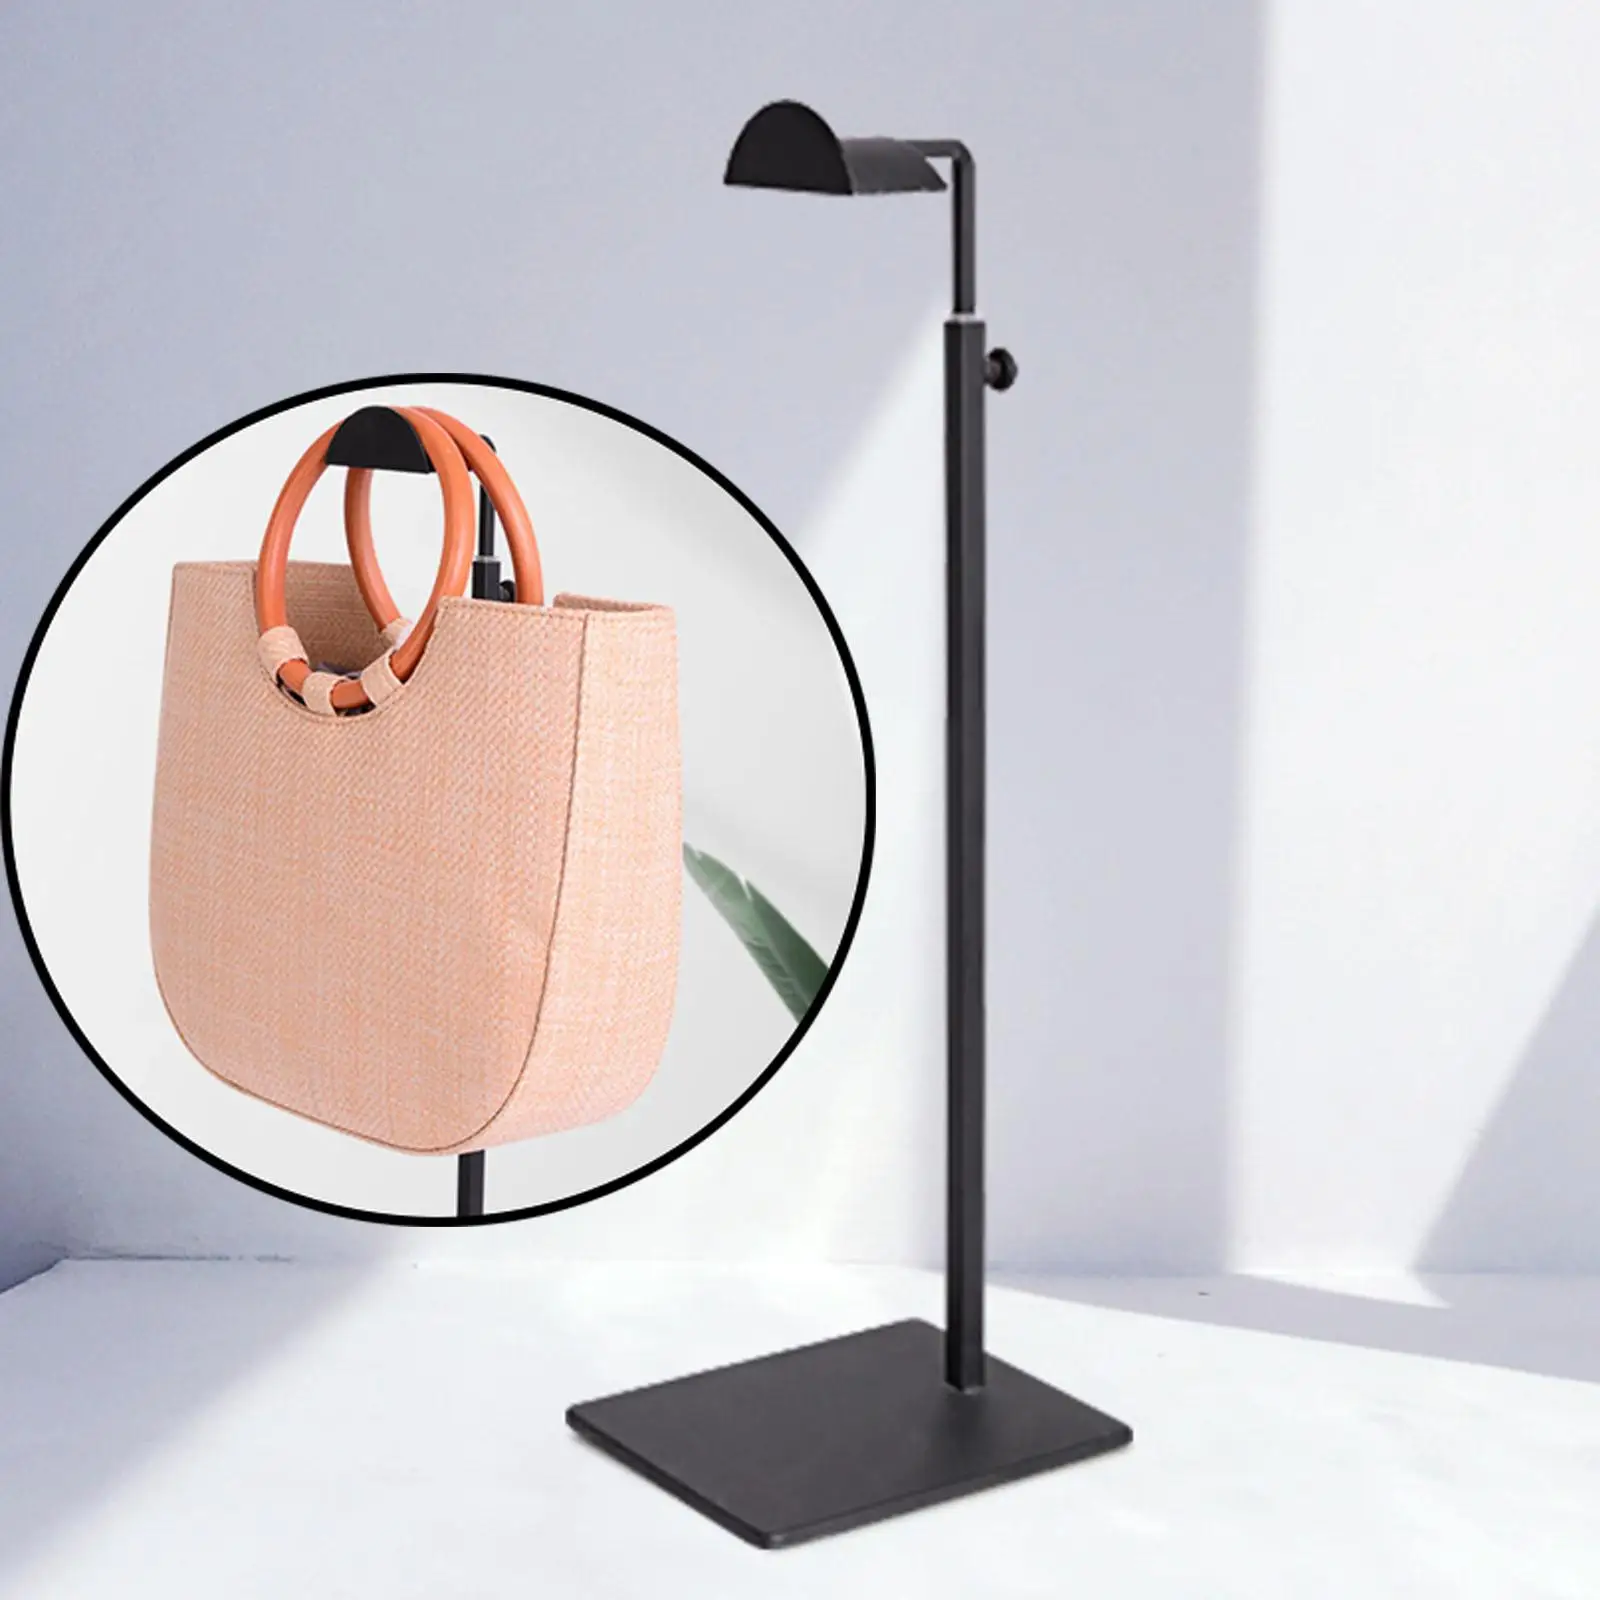 Handbag Display Stand Adjustable Height Metal Bag Holder Organizer Hanging Hook for Retail Windows Countertop Closet Shelves